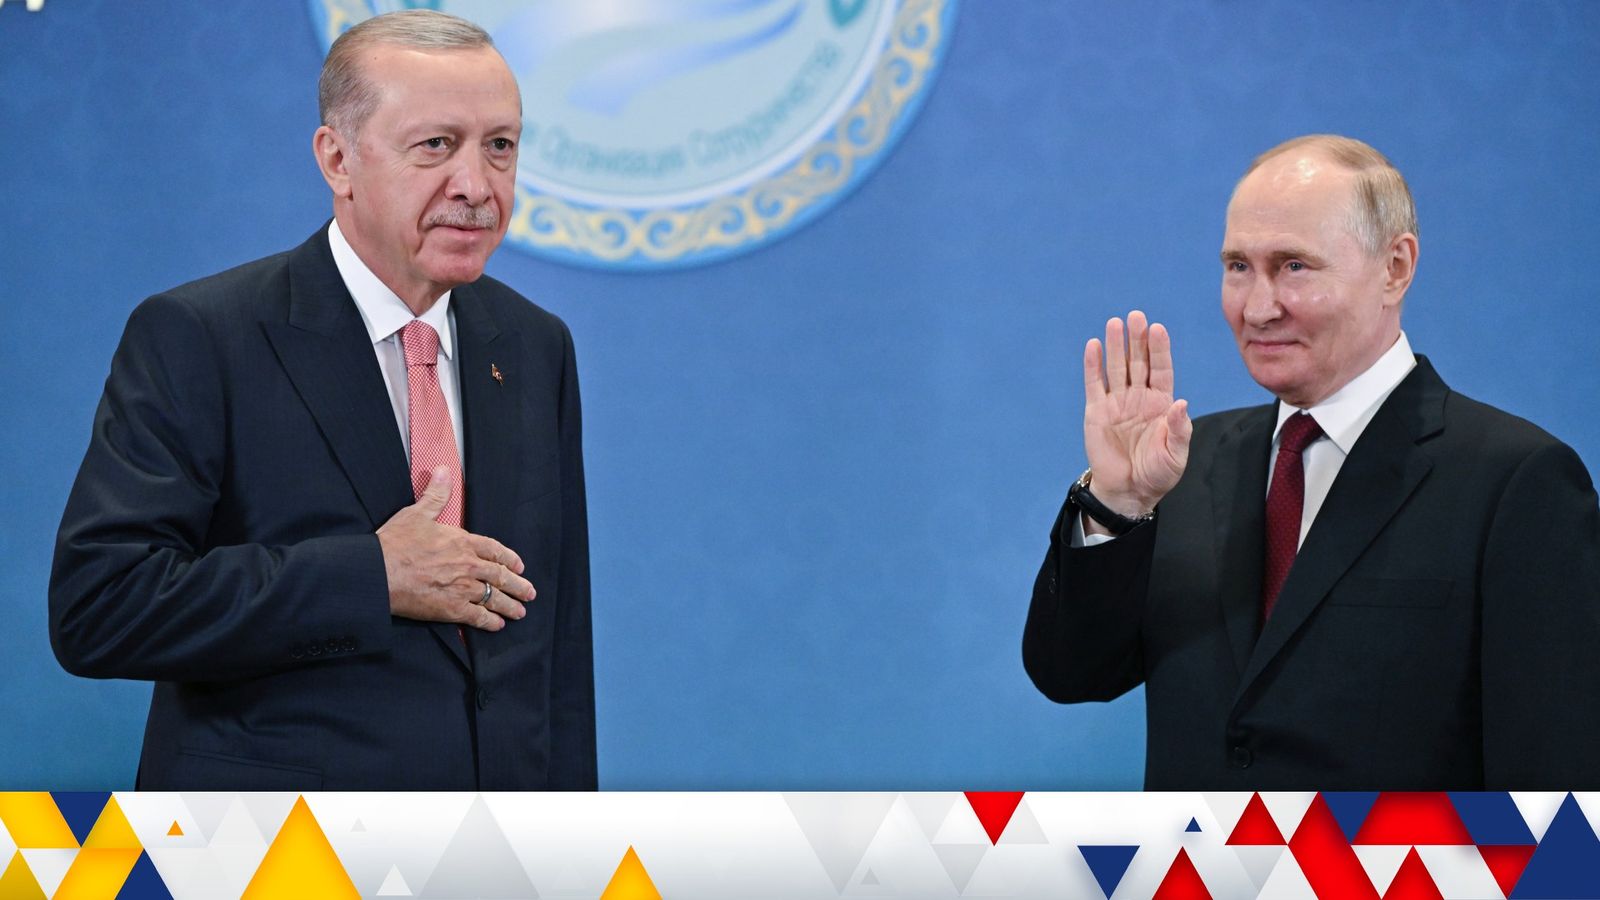 Latest Ukraine War Updates: Russia Rejects Turkey’s Offer After Putin-Erdogan Meeting; Ukrainian City Observes Day of Mourning | Global News